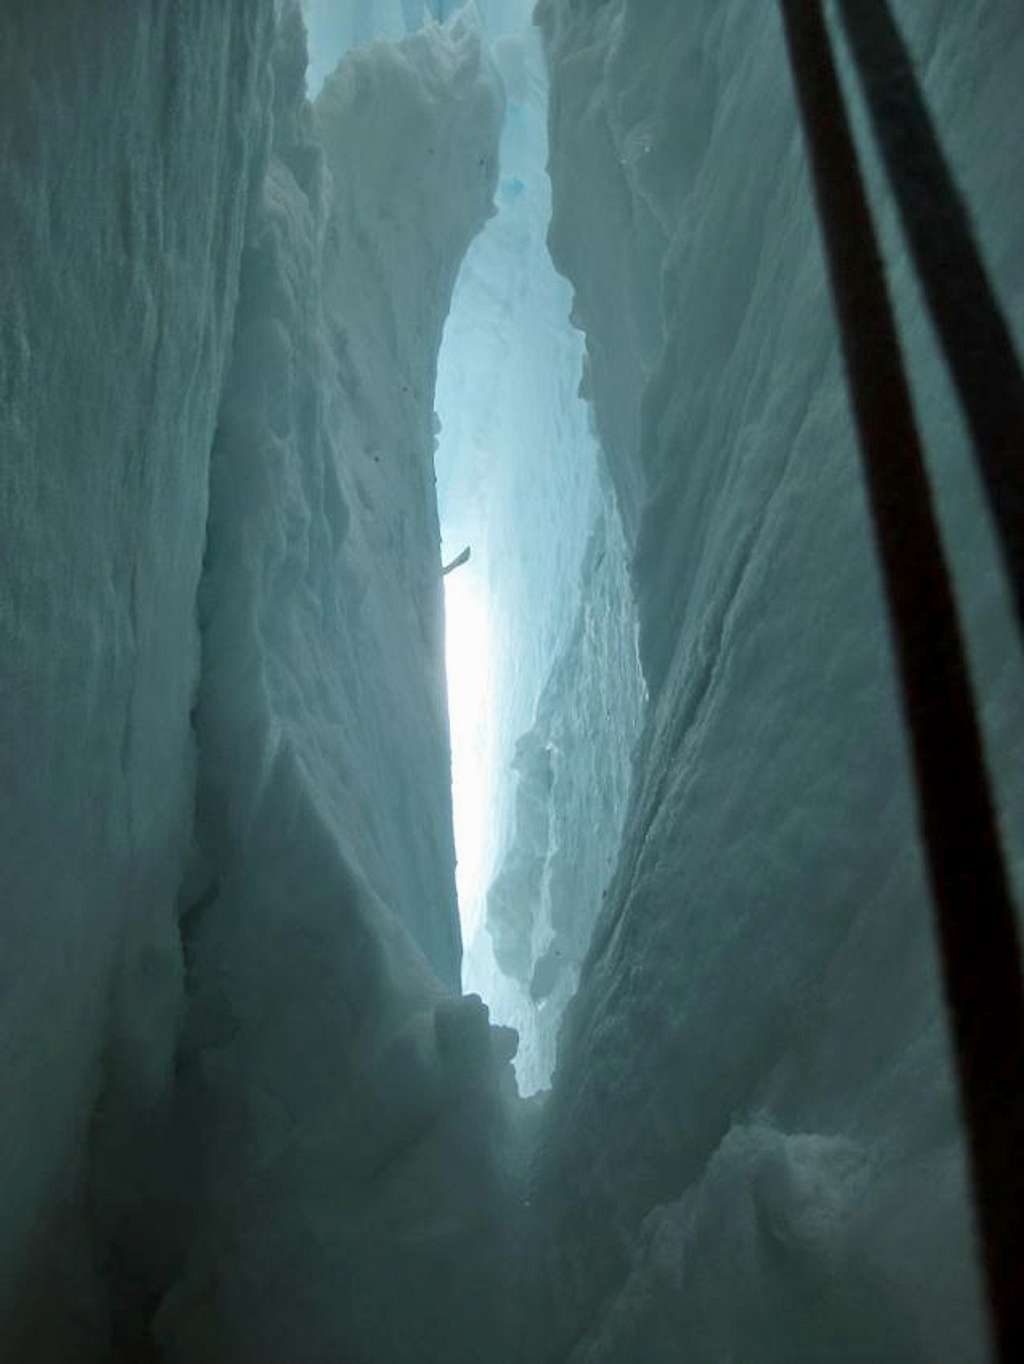 Inside a crevasse